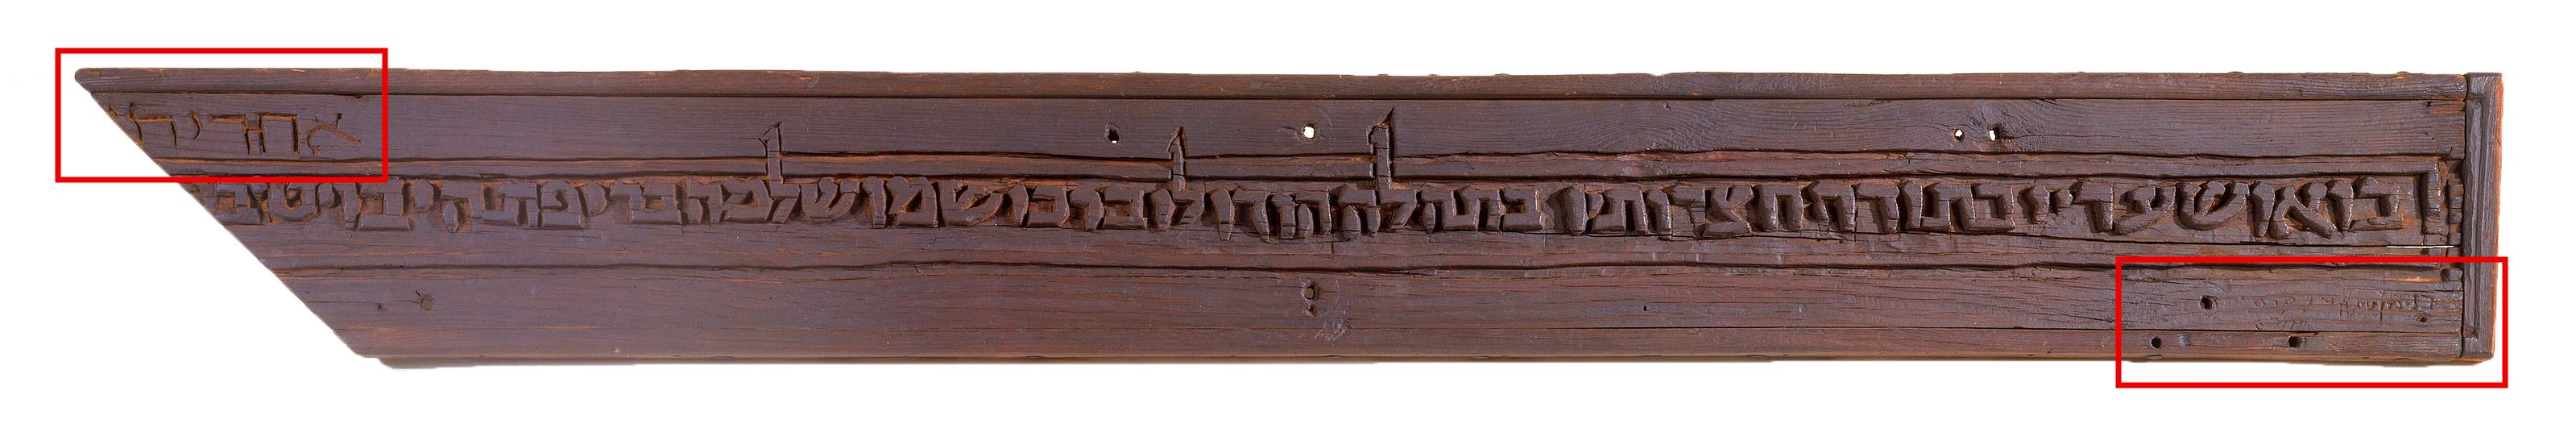 Synagogue dedication inscription with graffiti, Ben Ezra Synagogue, Fustat, Egypt, 13th century, wood, 18.3 x 165.7 cm (The Jewish Museum)